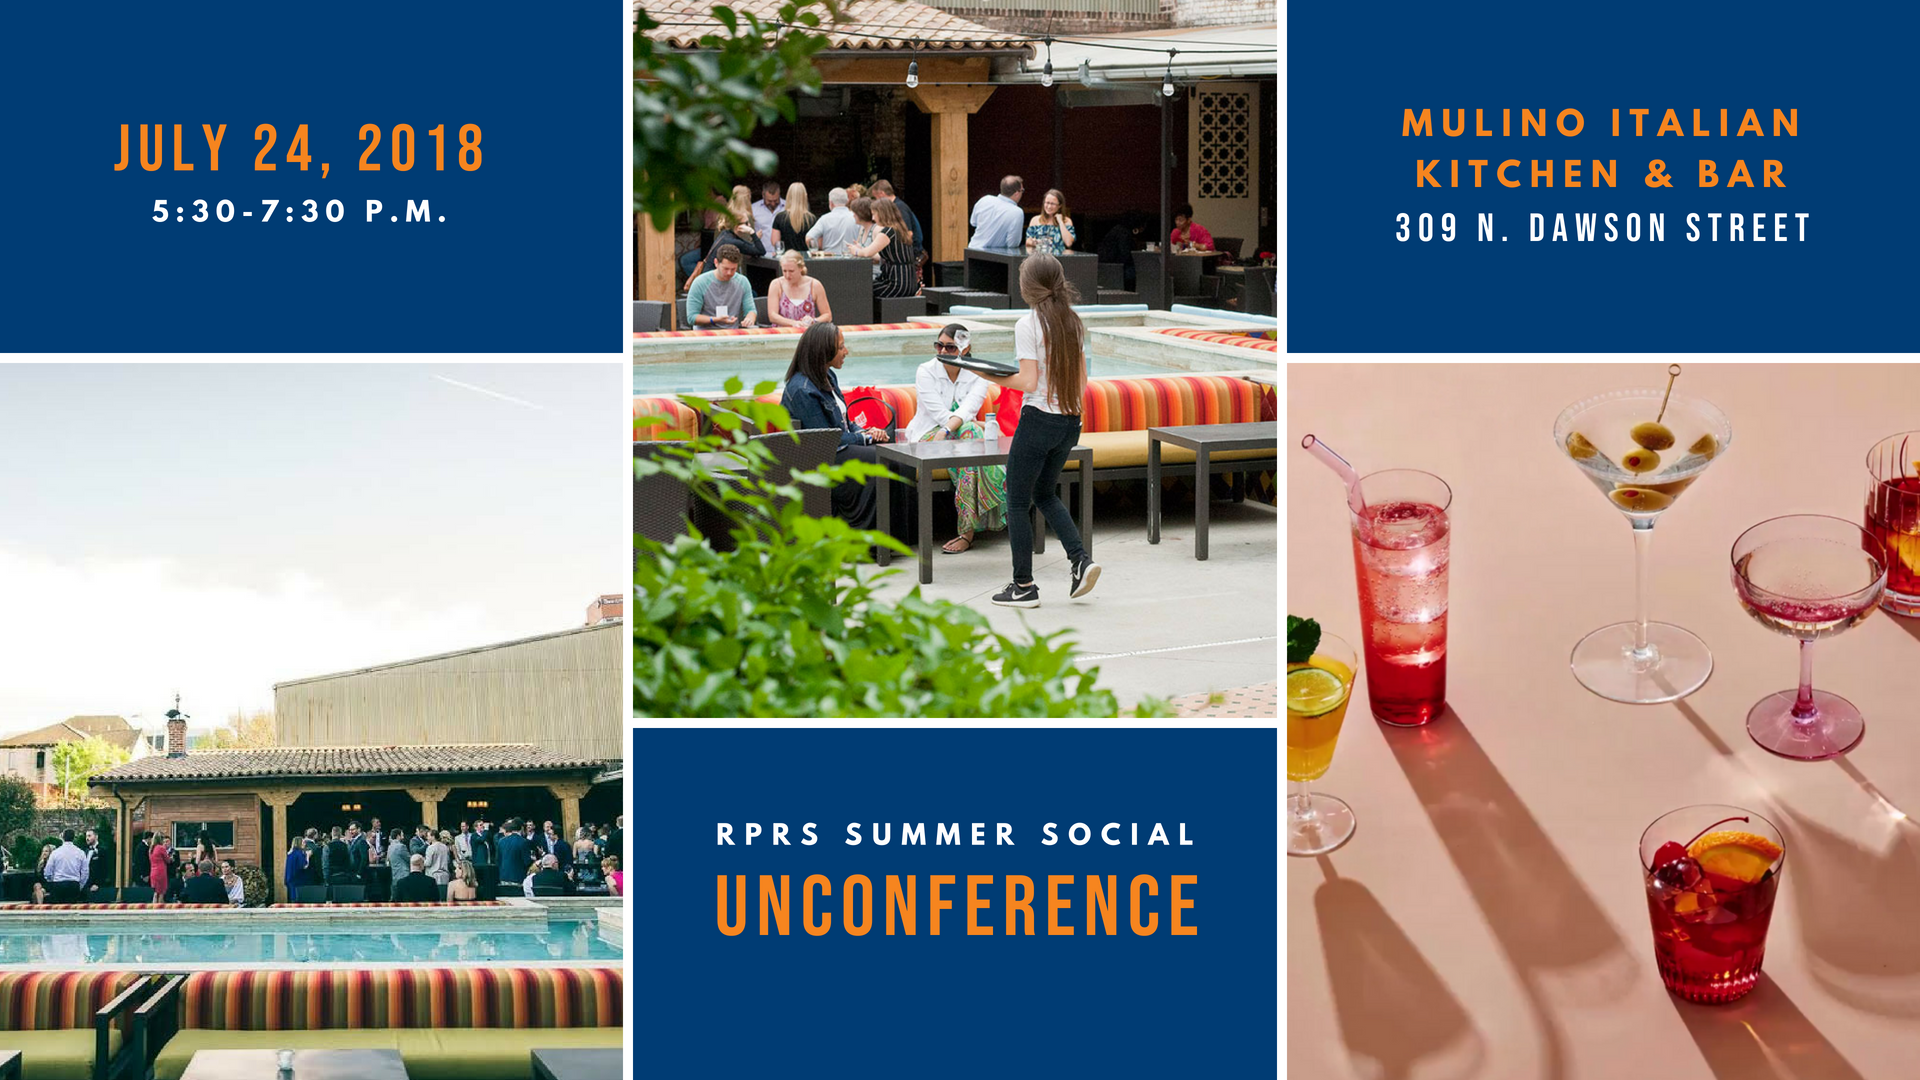 RPRS Summer Social "Unconference" 2018